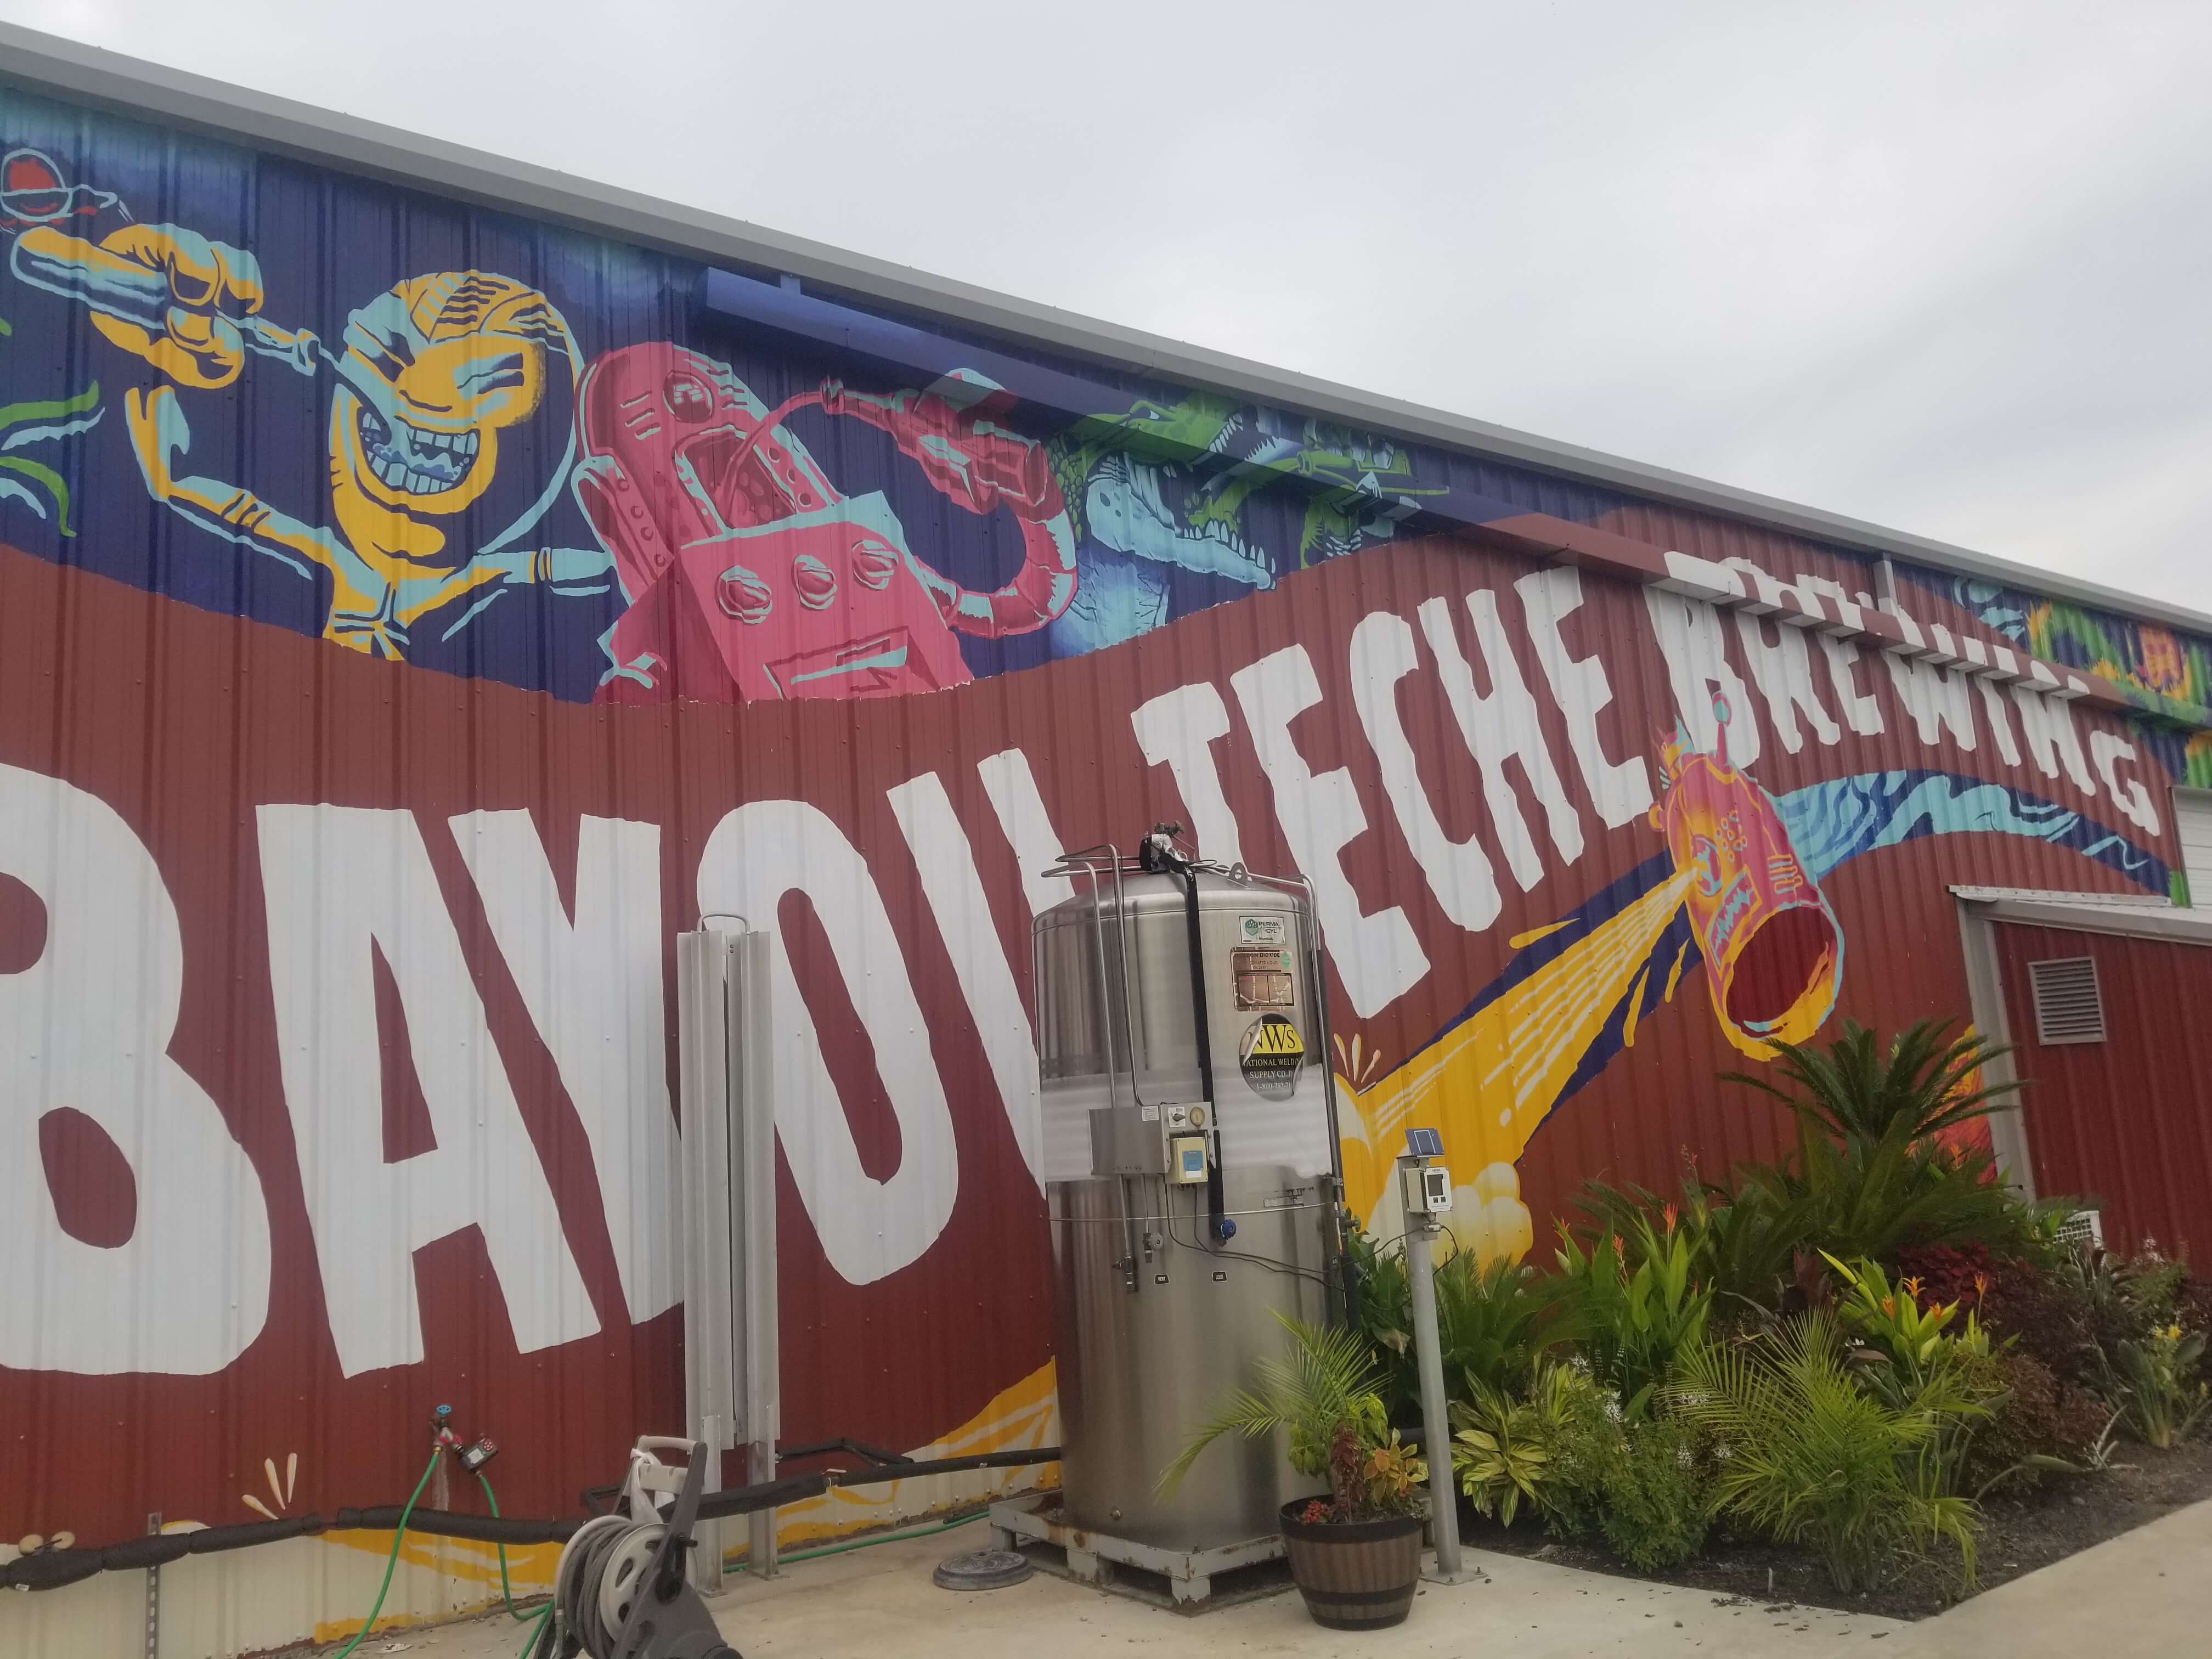 Navigating the Bayou Teche